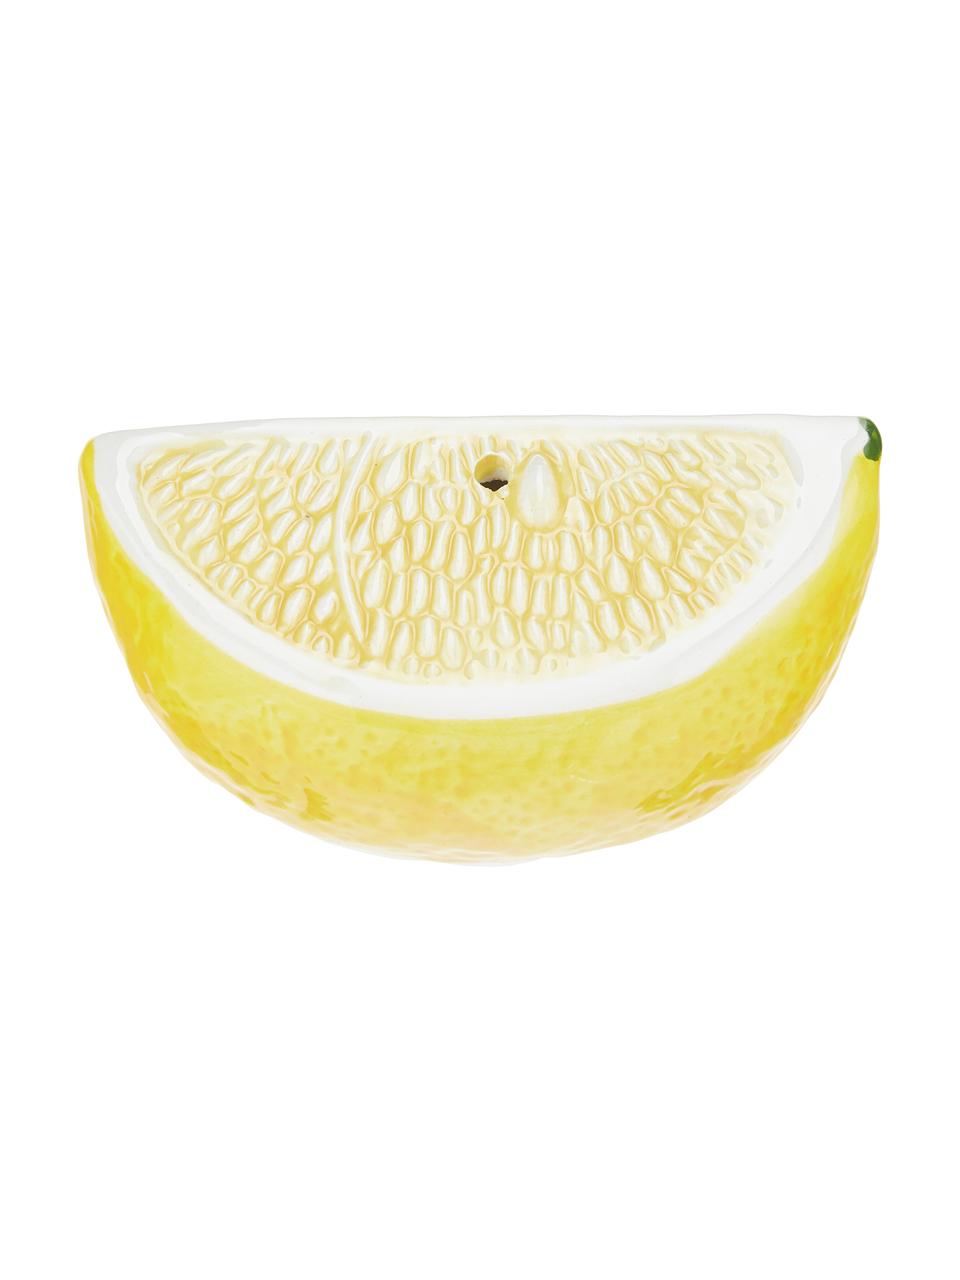 Sada solničky a pepřenky Lemon, 2 díly, Porcelán (dolomit), Bílá, žlutá, Š 7 cm, V 7 cm